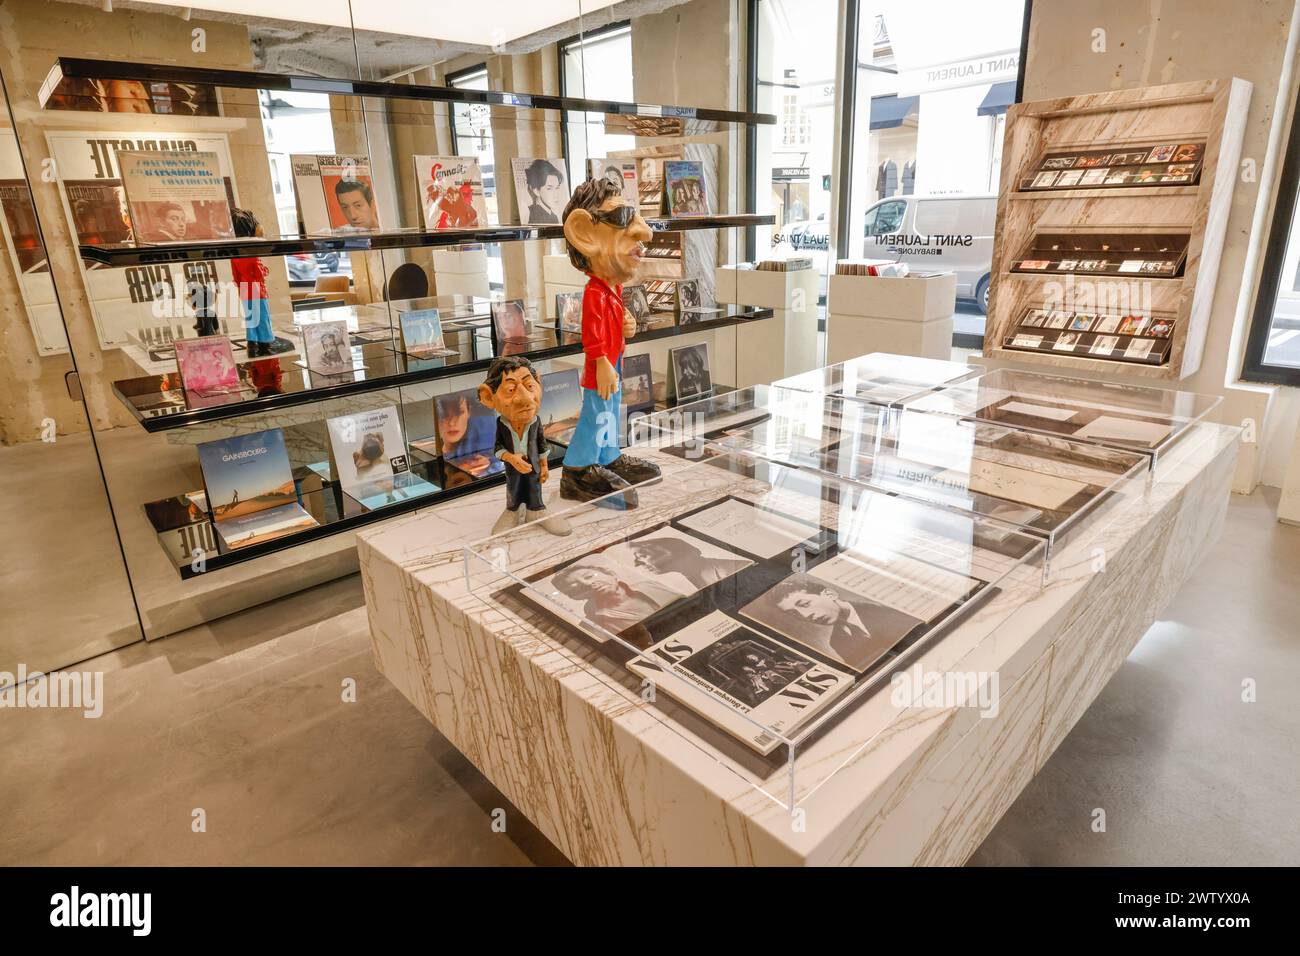 SAINT LAURENT HAS OPENED A BOOK SHOP IN PARIS Stock Photo